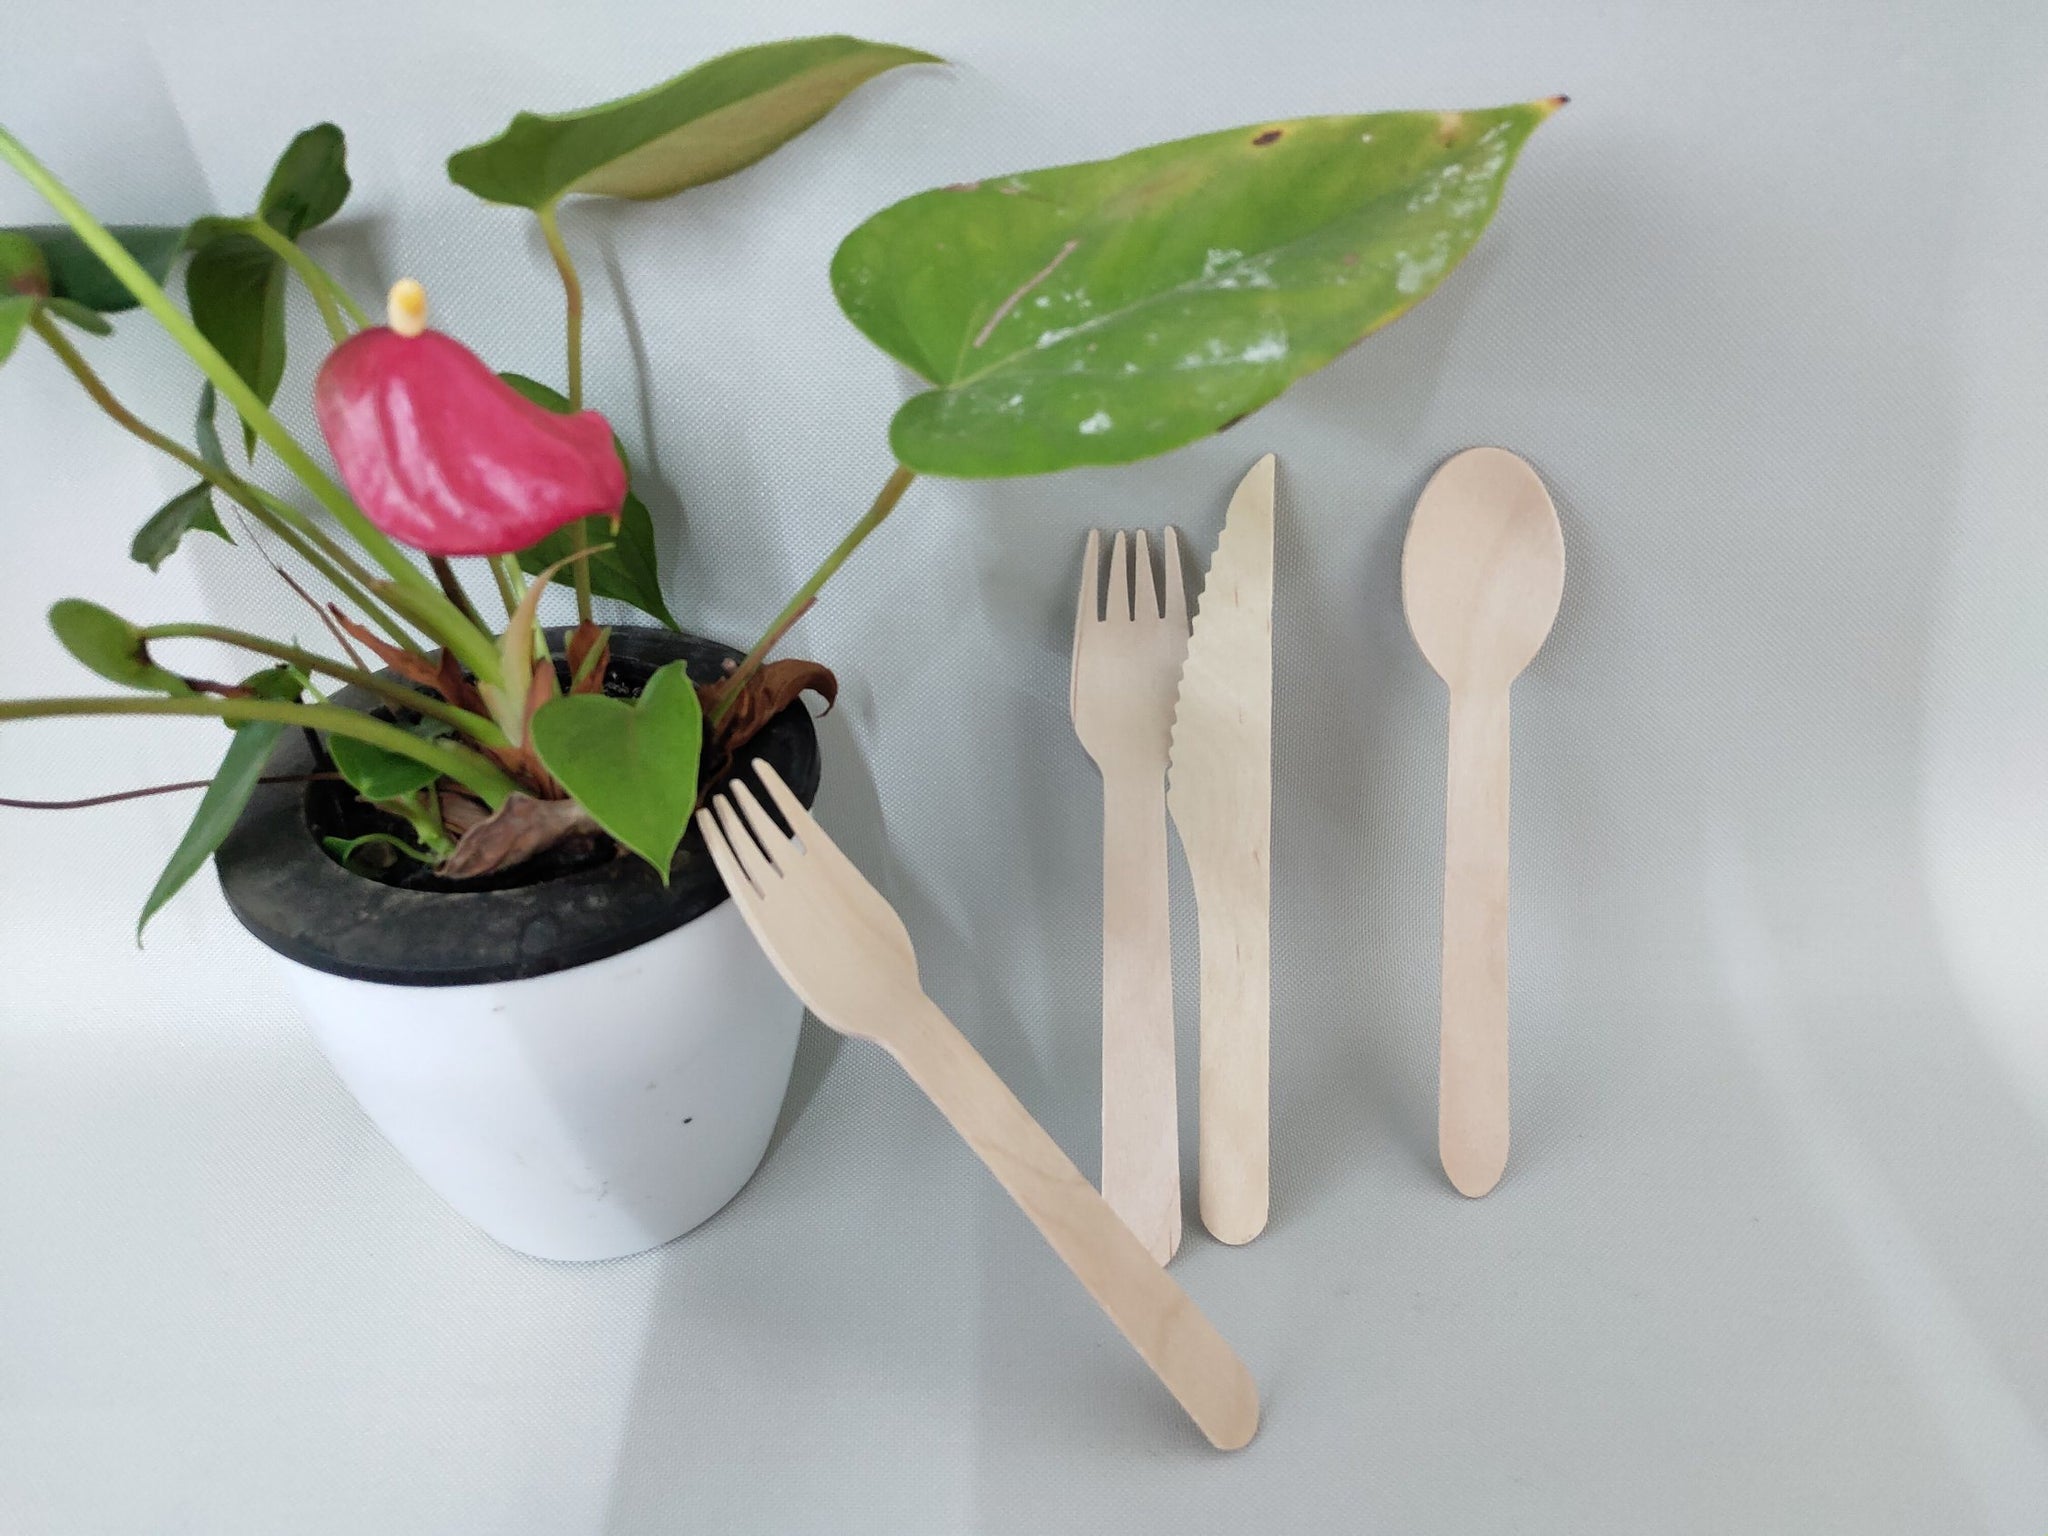 Wholesale Biodegradable & Disposable Cutlery Supplier & Factory - Lesui